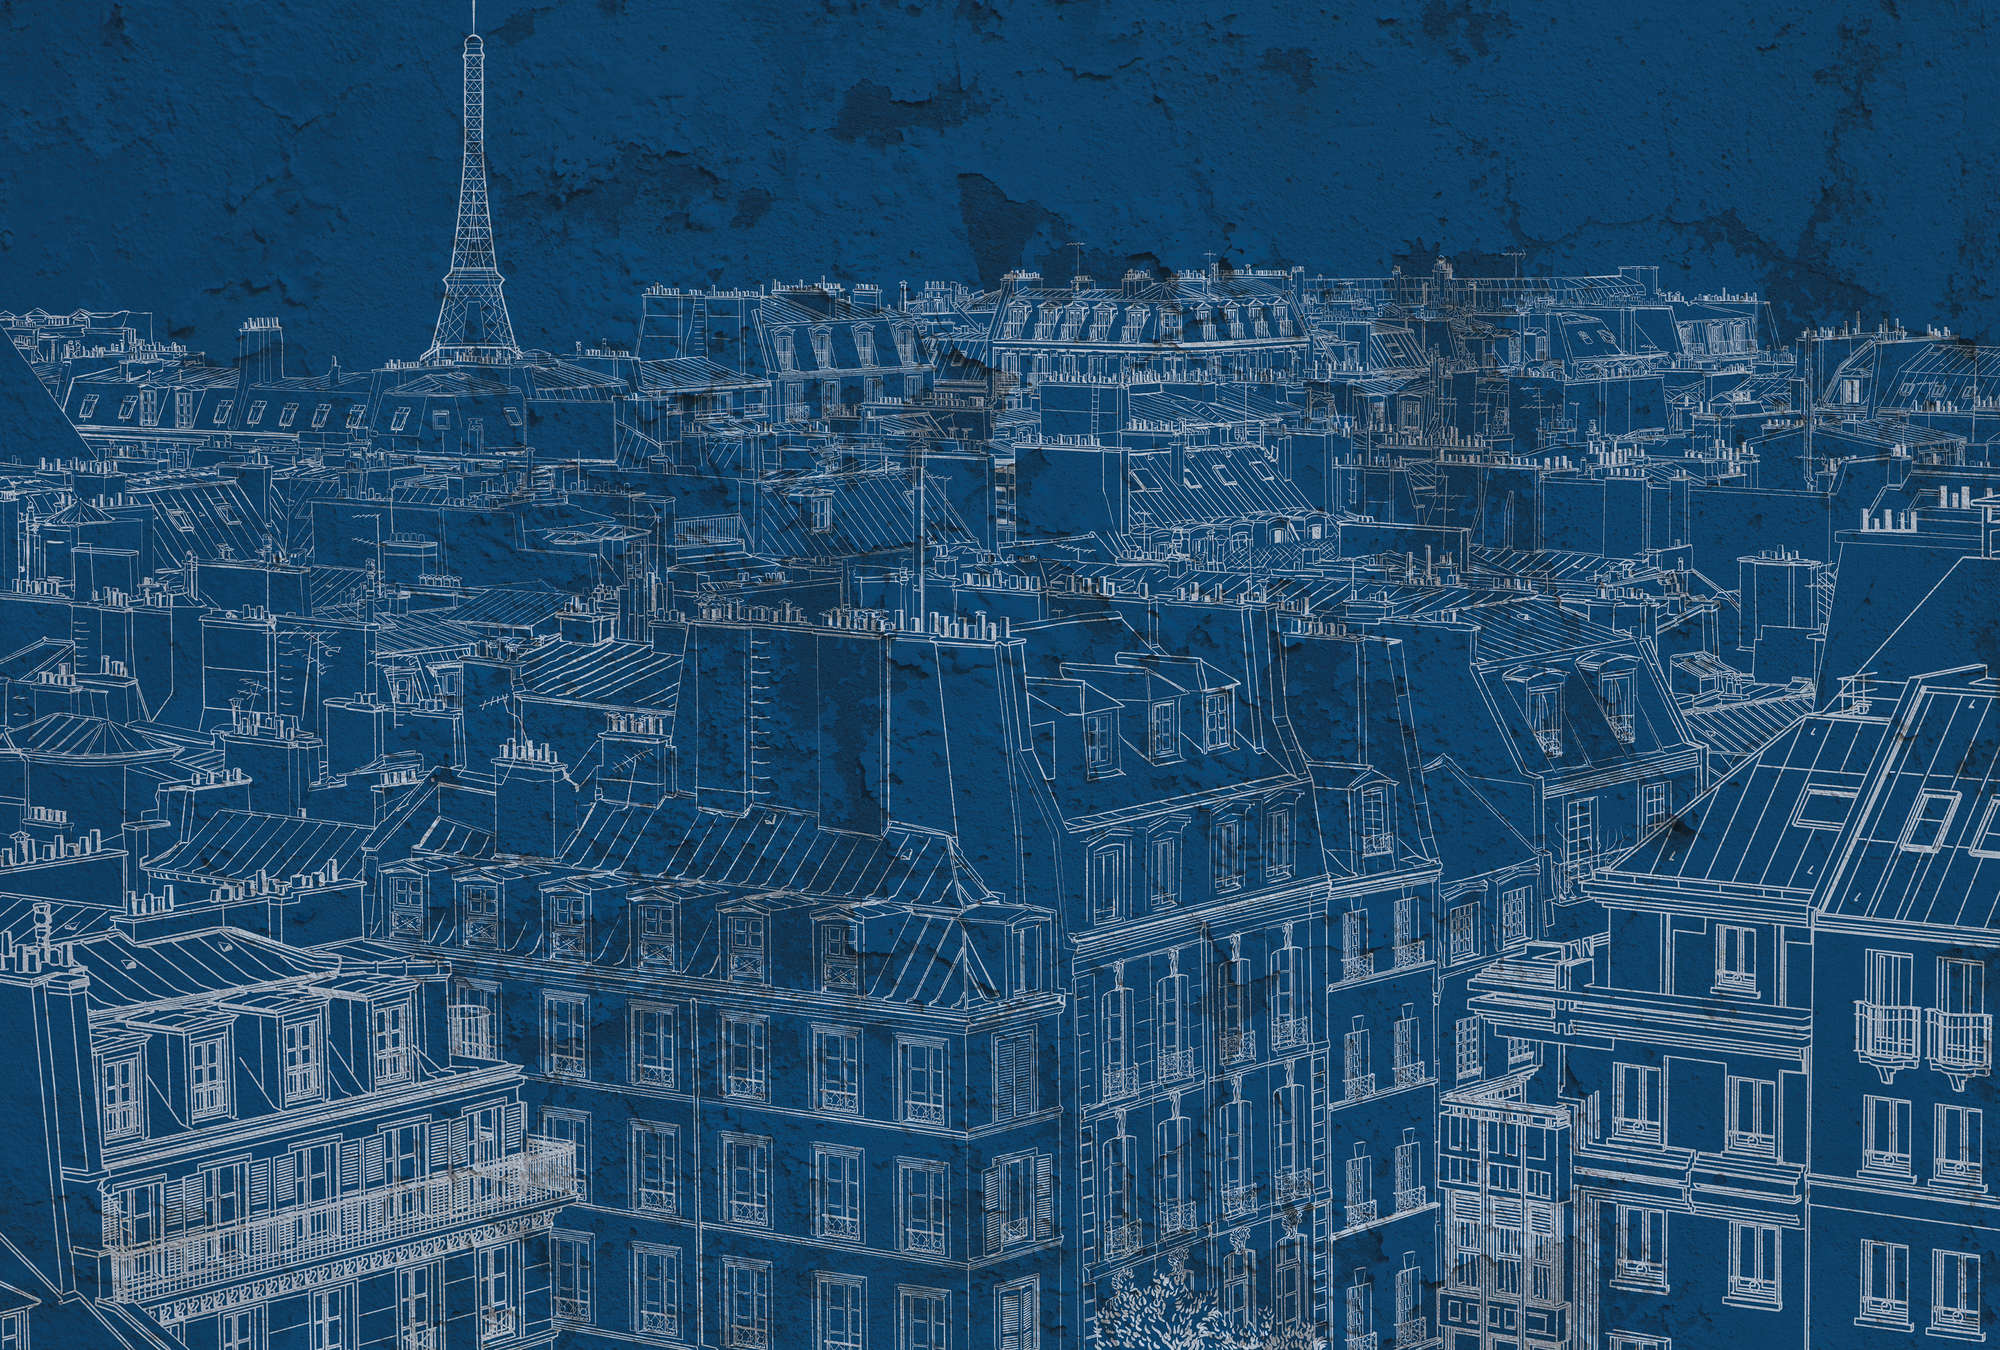             Fototapete Paris Blueprint-Design & Skyline – Blau, Weiß
        